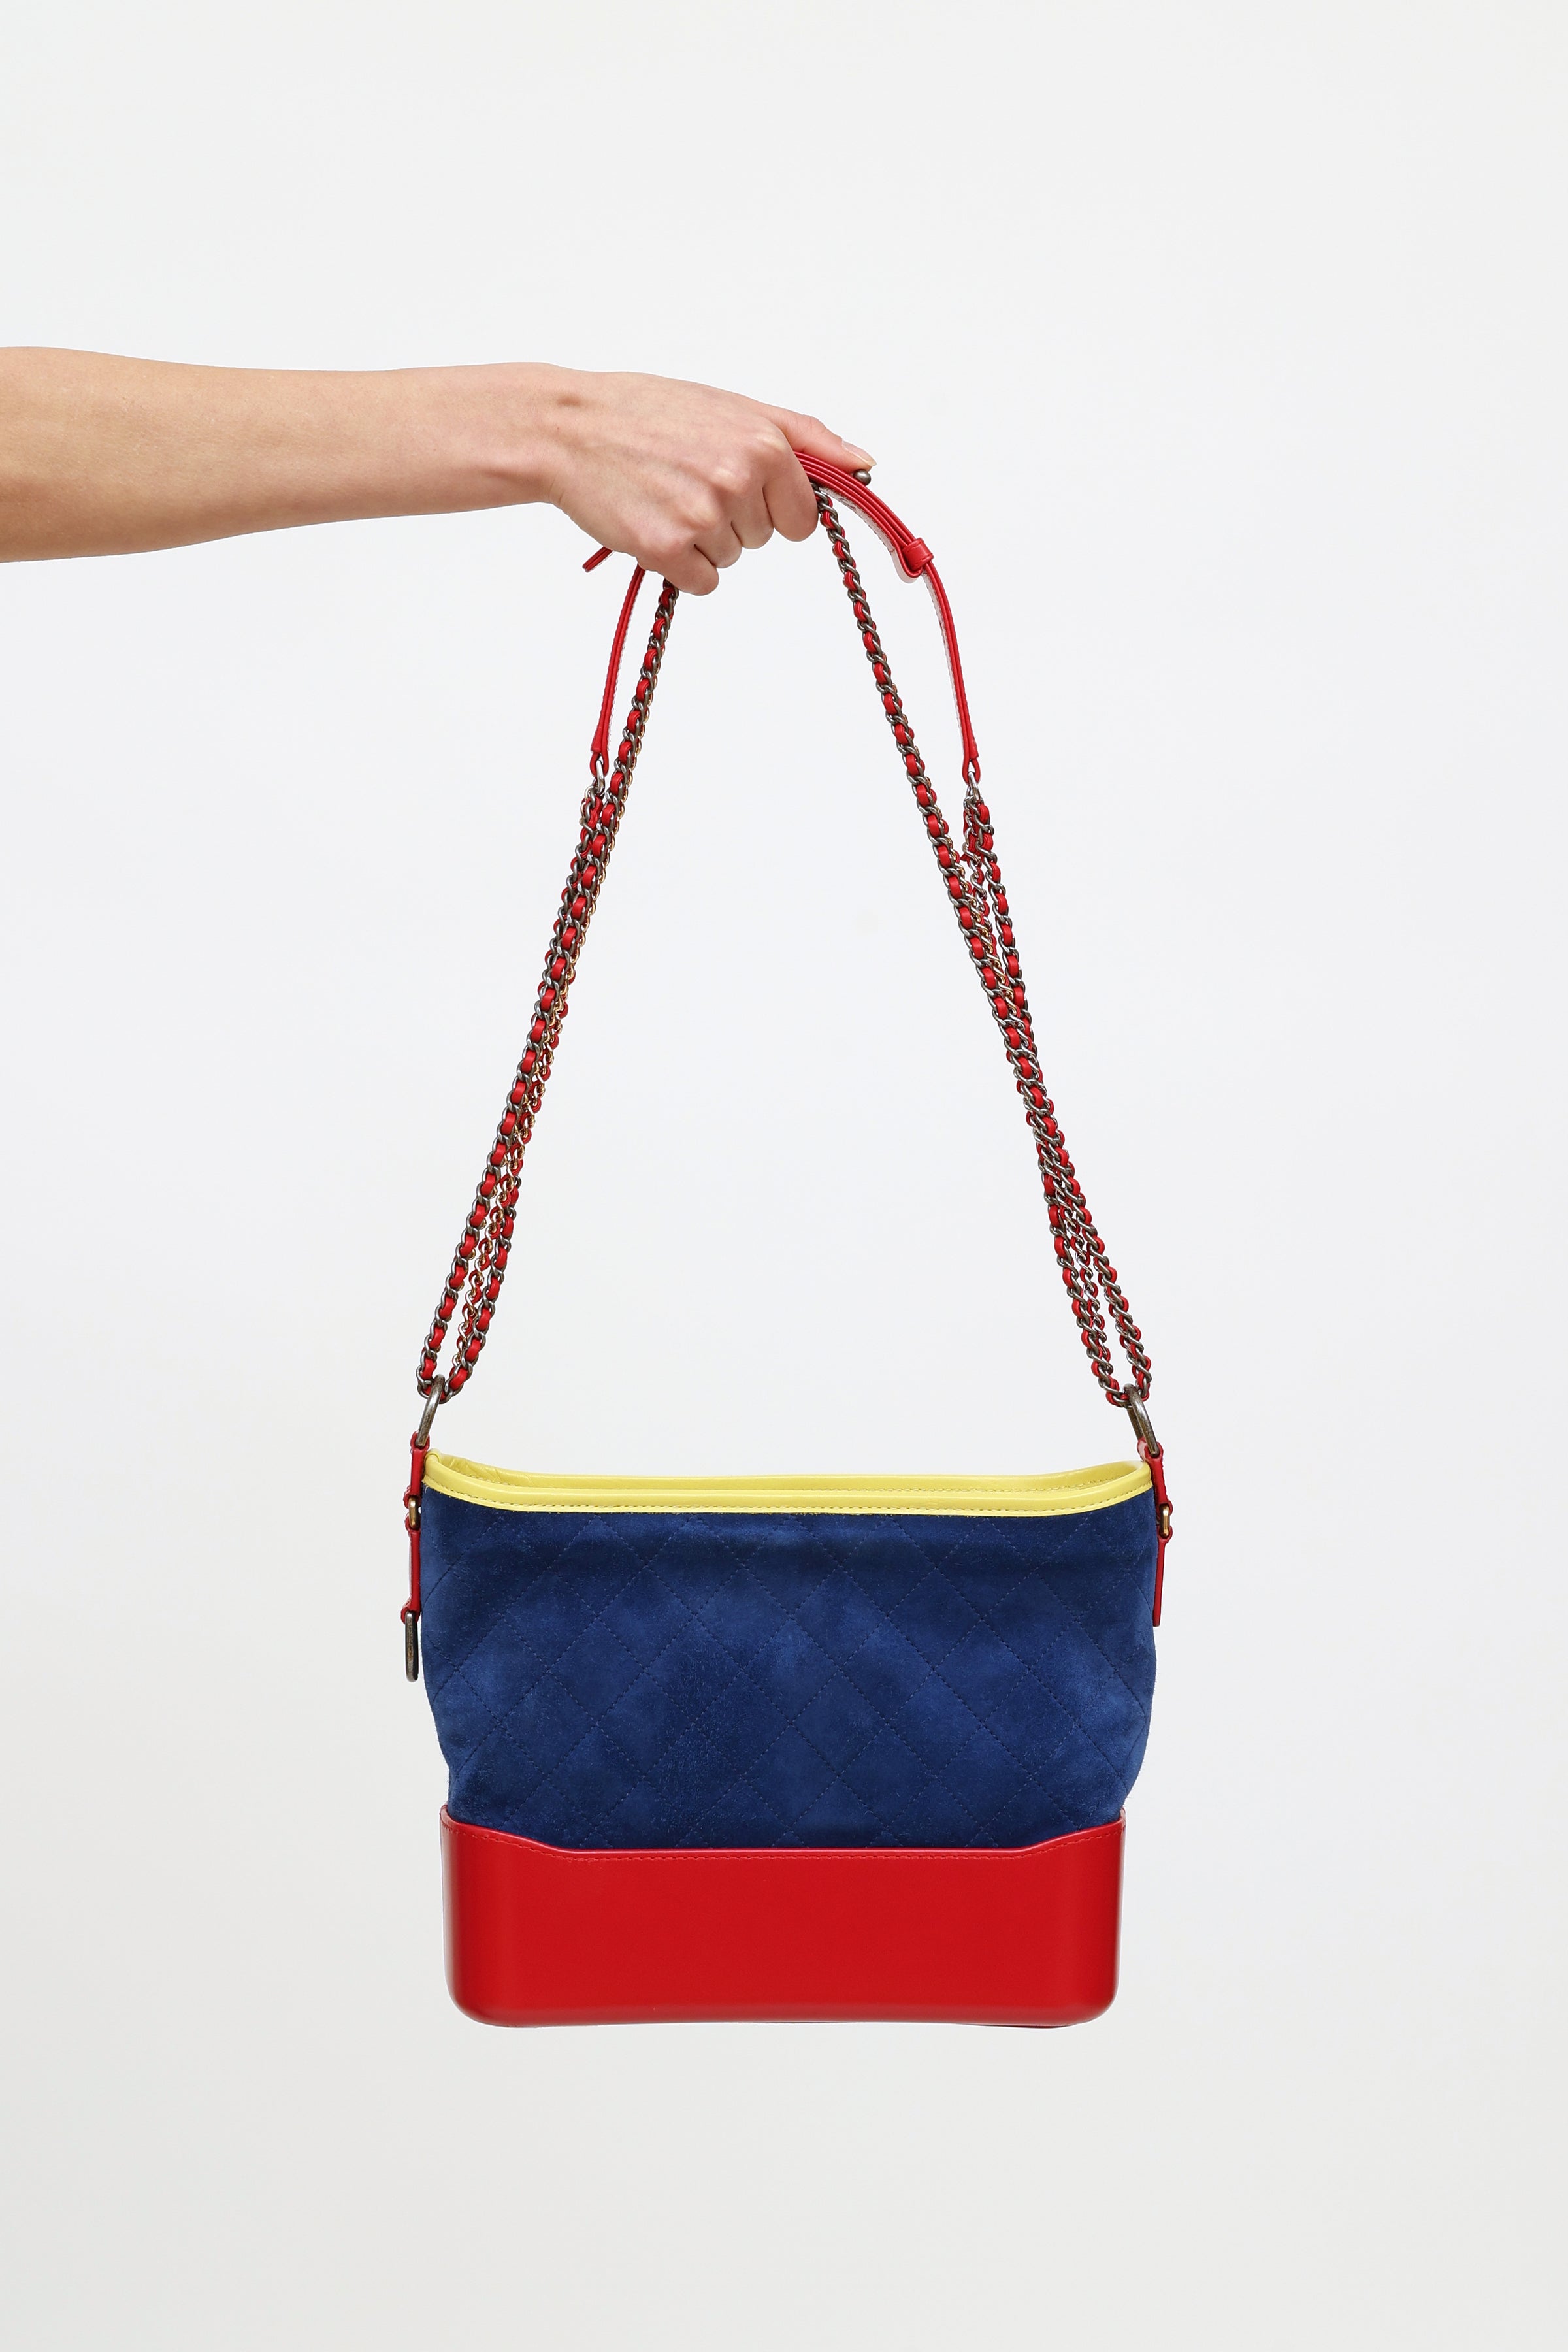 Chanel // 2017 Blue & Red Medium Gabrielle Bag – VSP Consignment